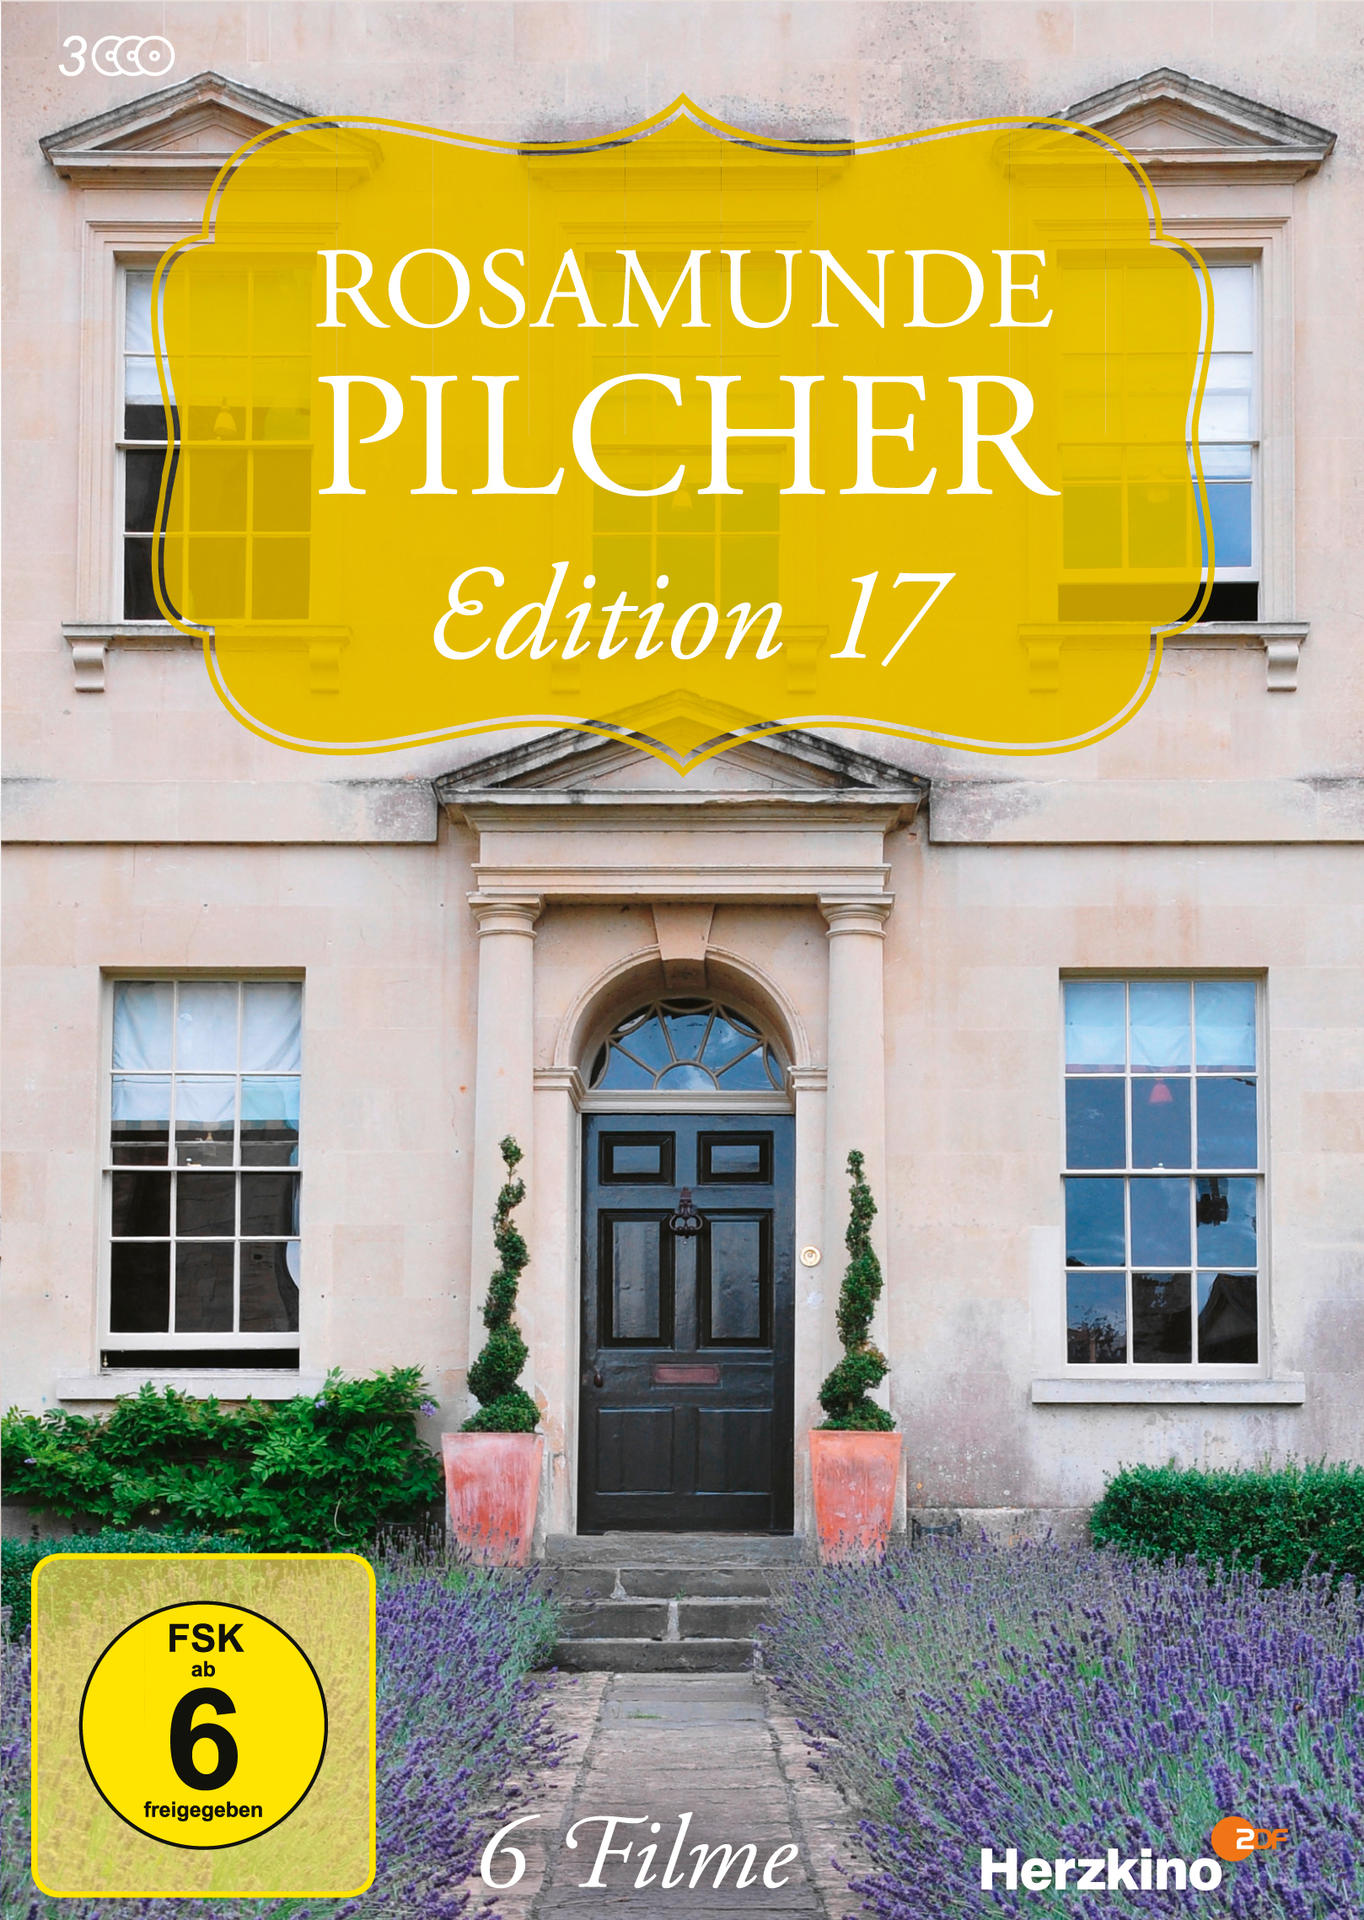 Rosamunde Pilcher 17 Edition DVD